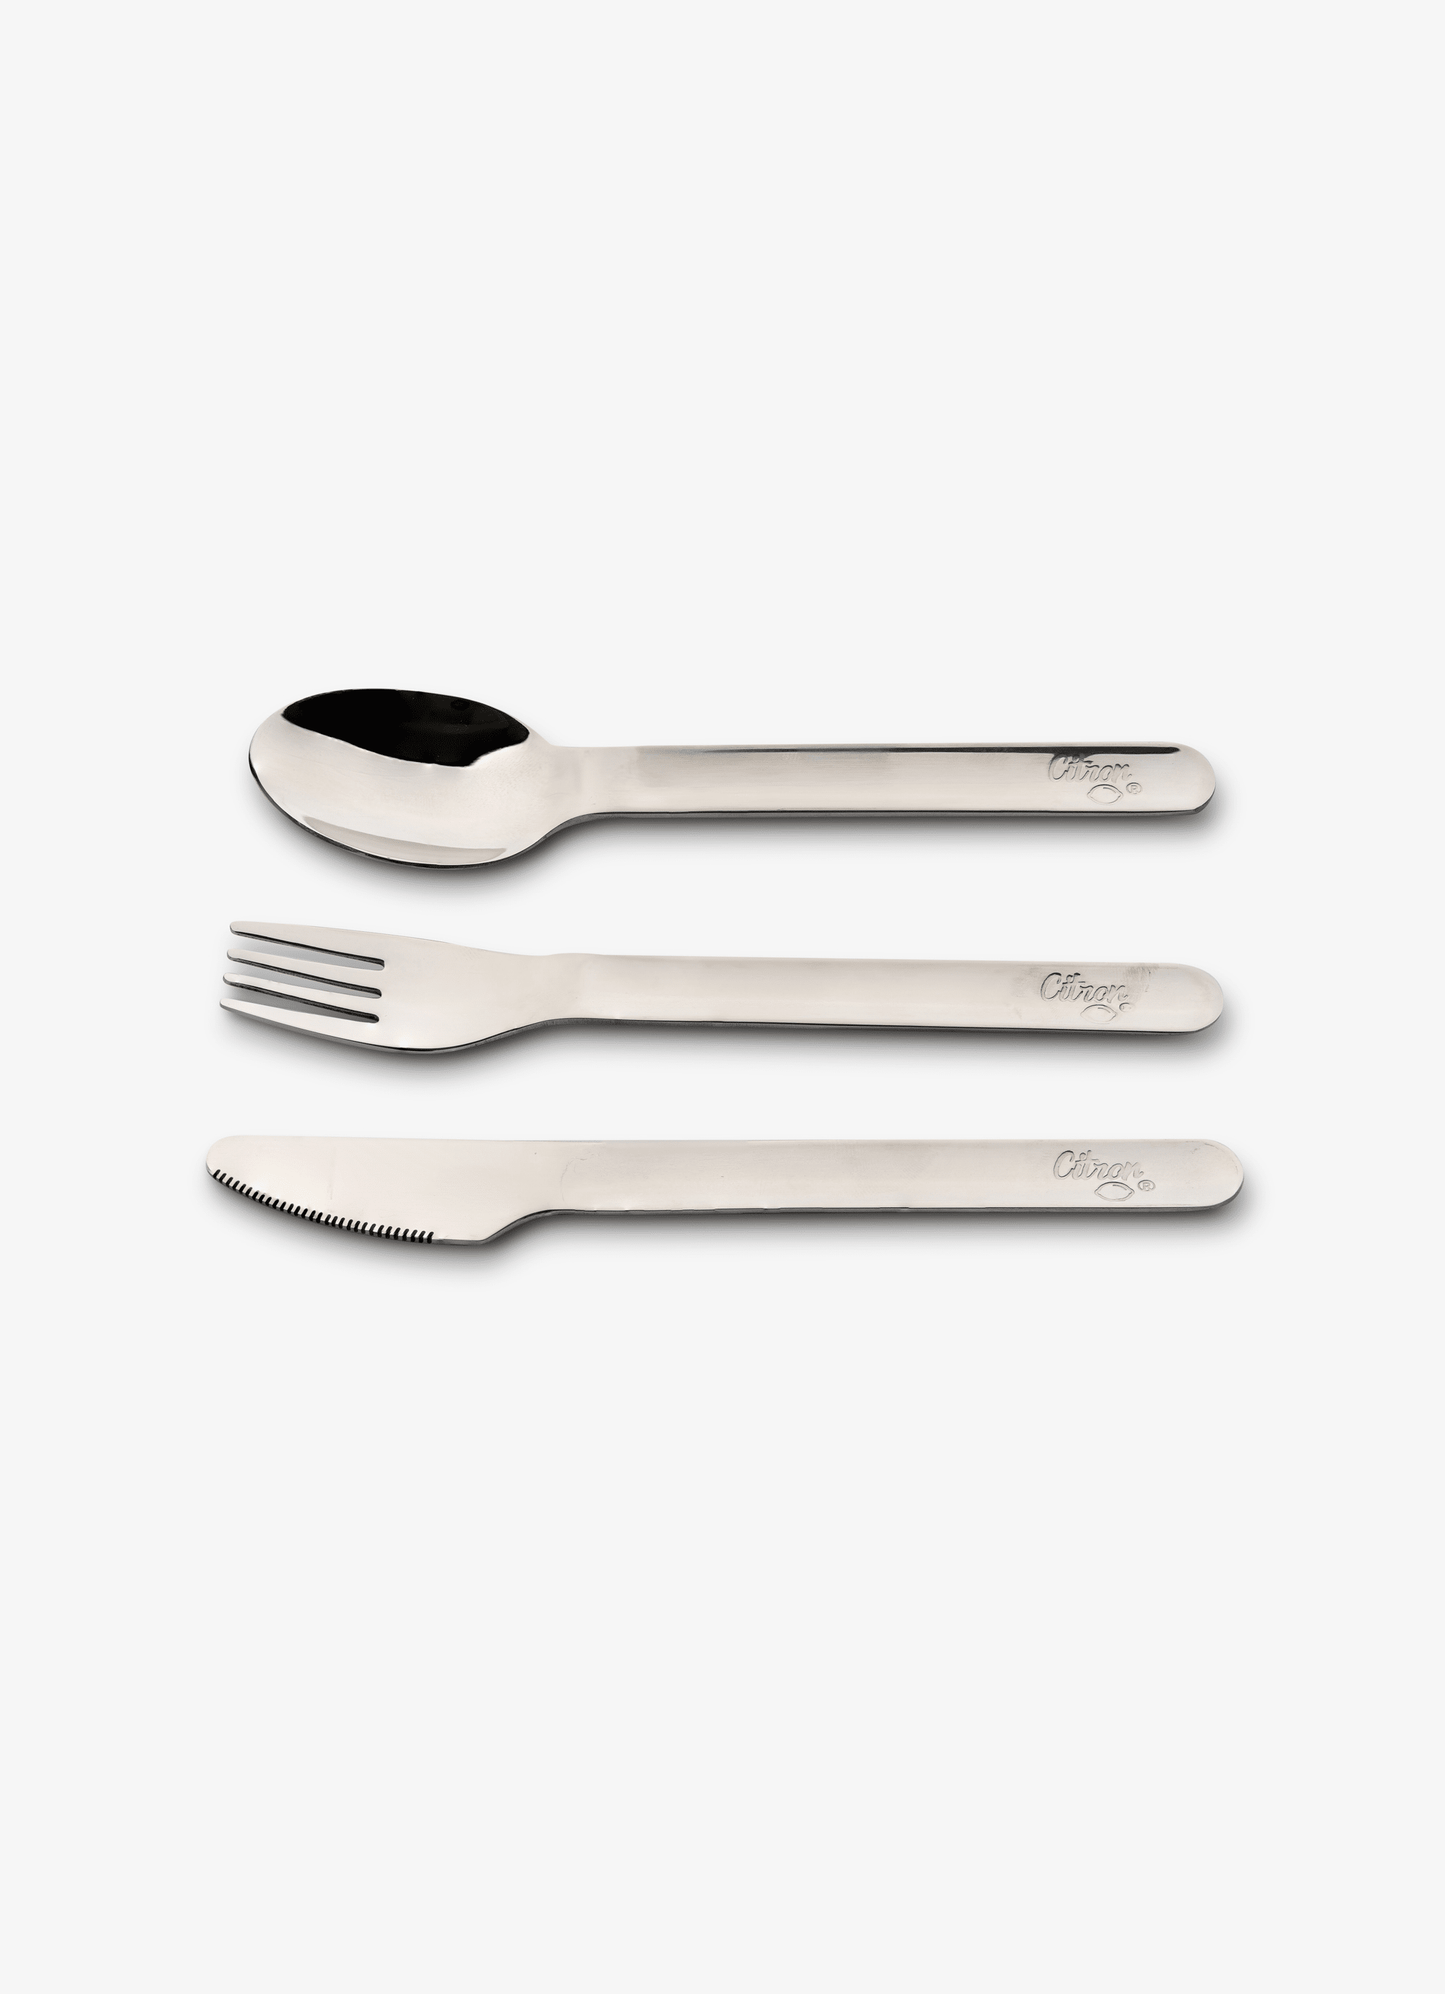 Stainless Steel Cutlery Set - Lemon + Case